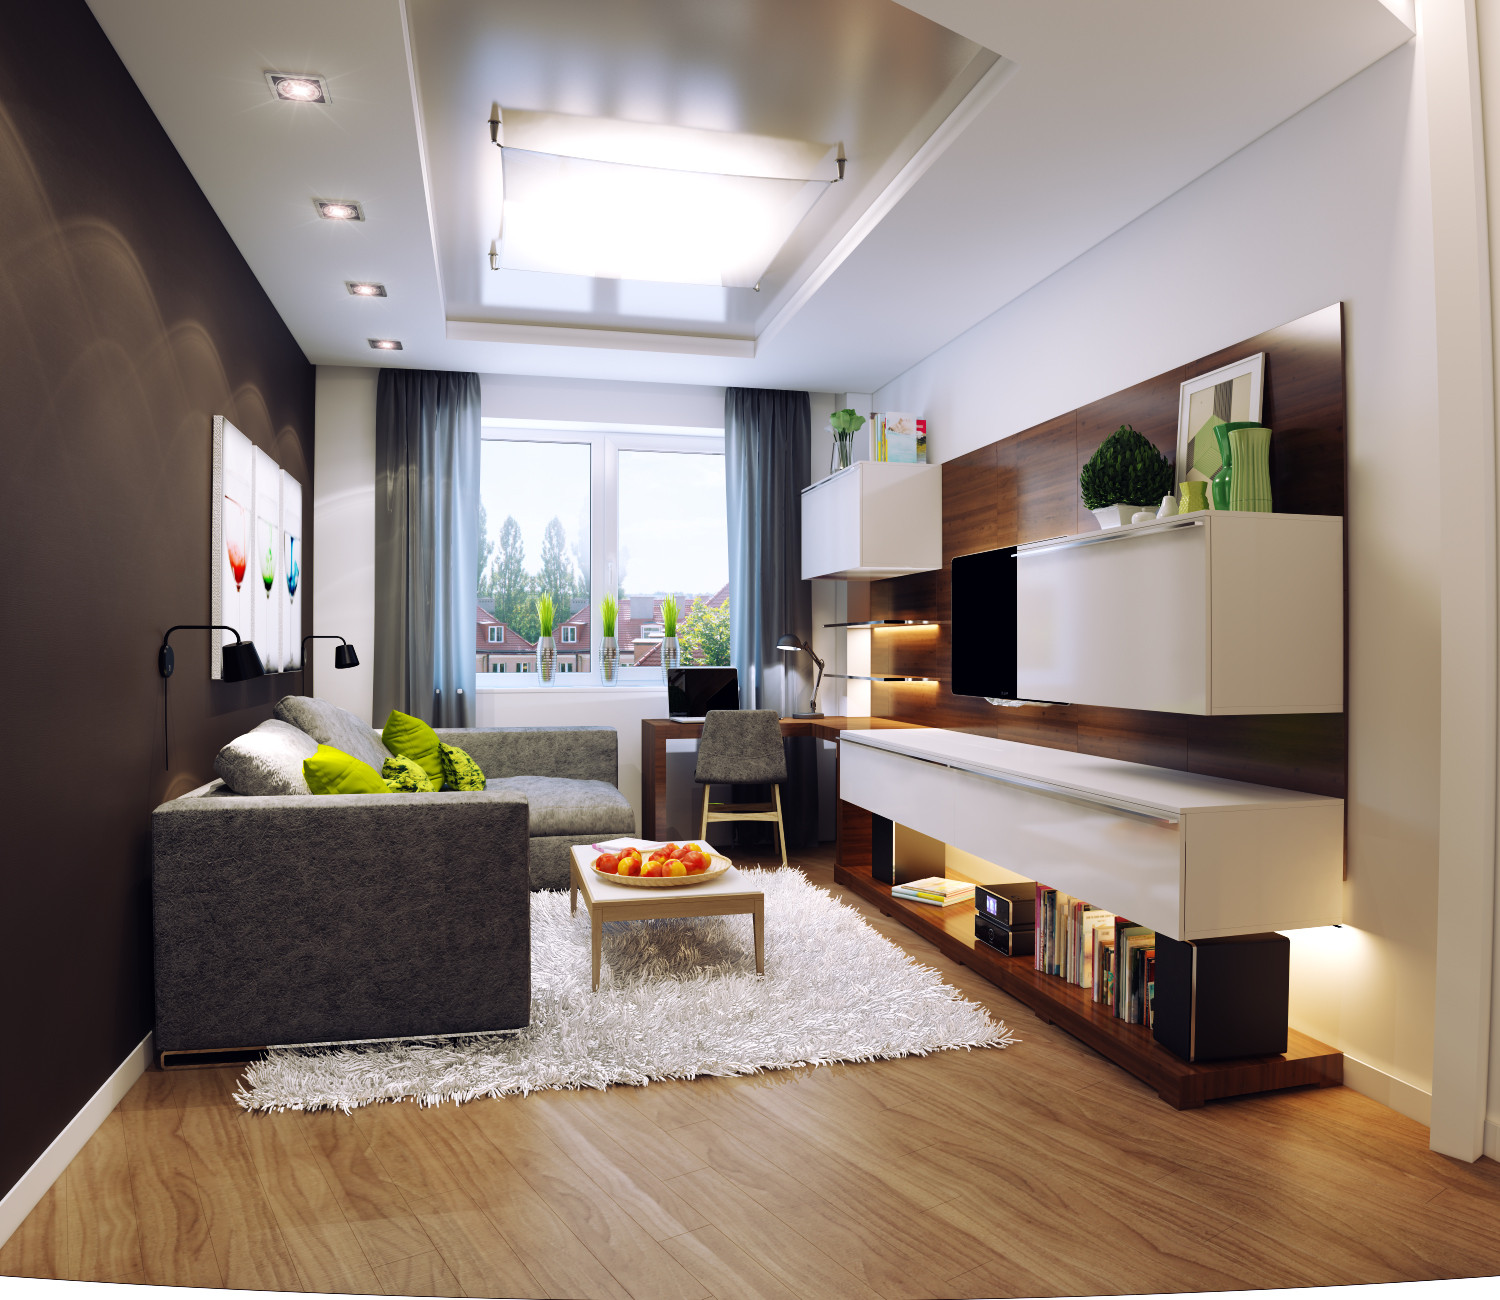 Small Living Room Design
 50 Best Small Living Room Design Ideas for 2019